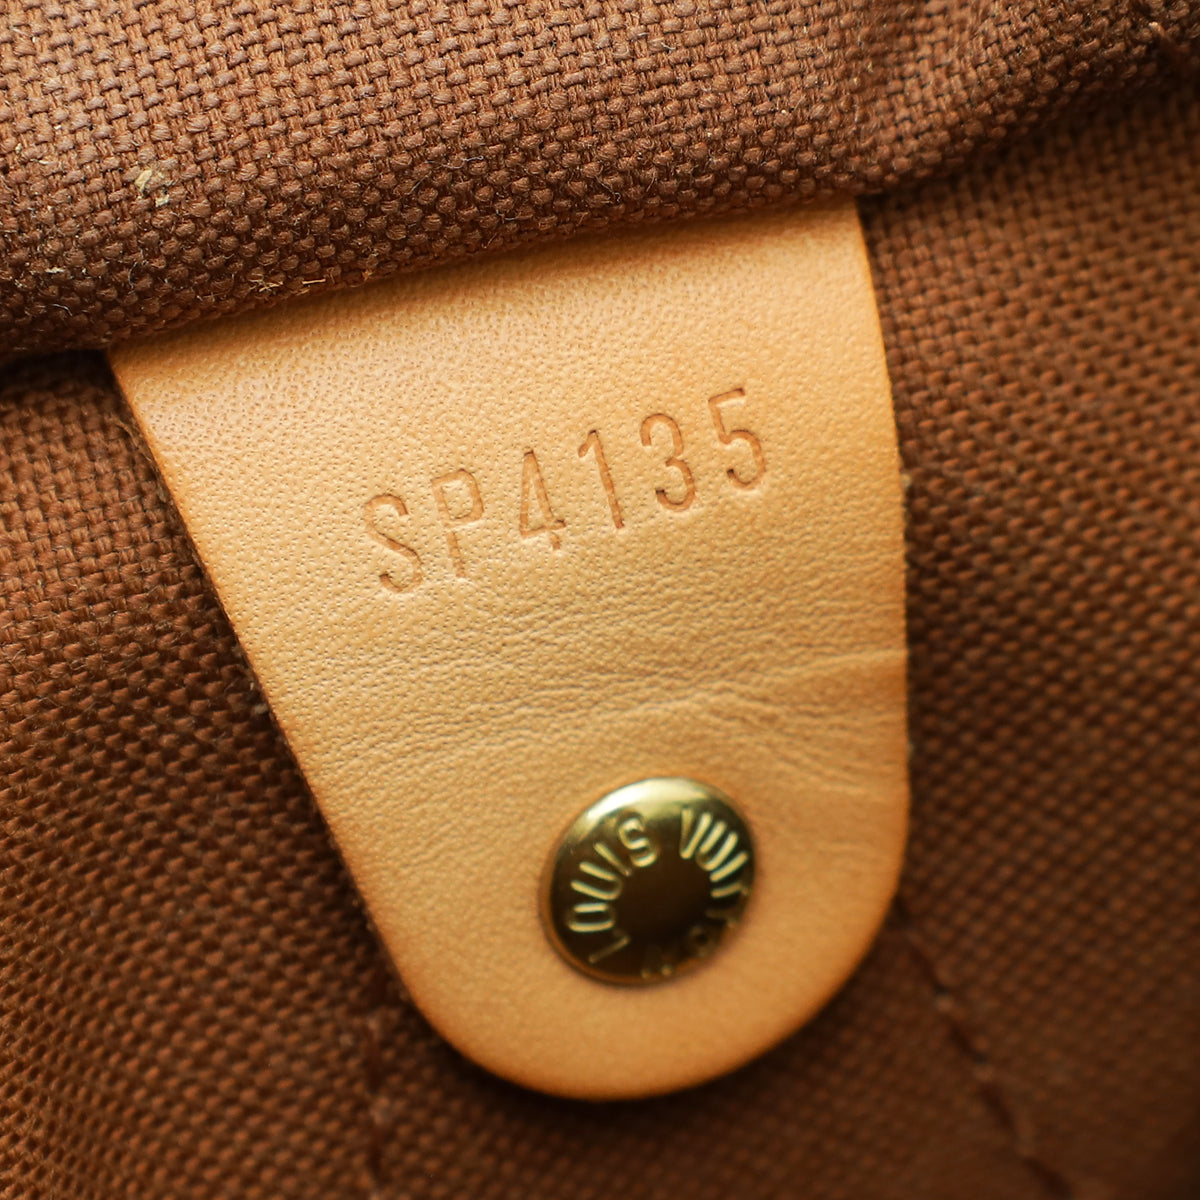 Louis Vuitton Monogram Speedy 30 Bandouliere Bag